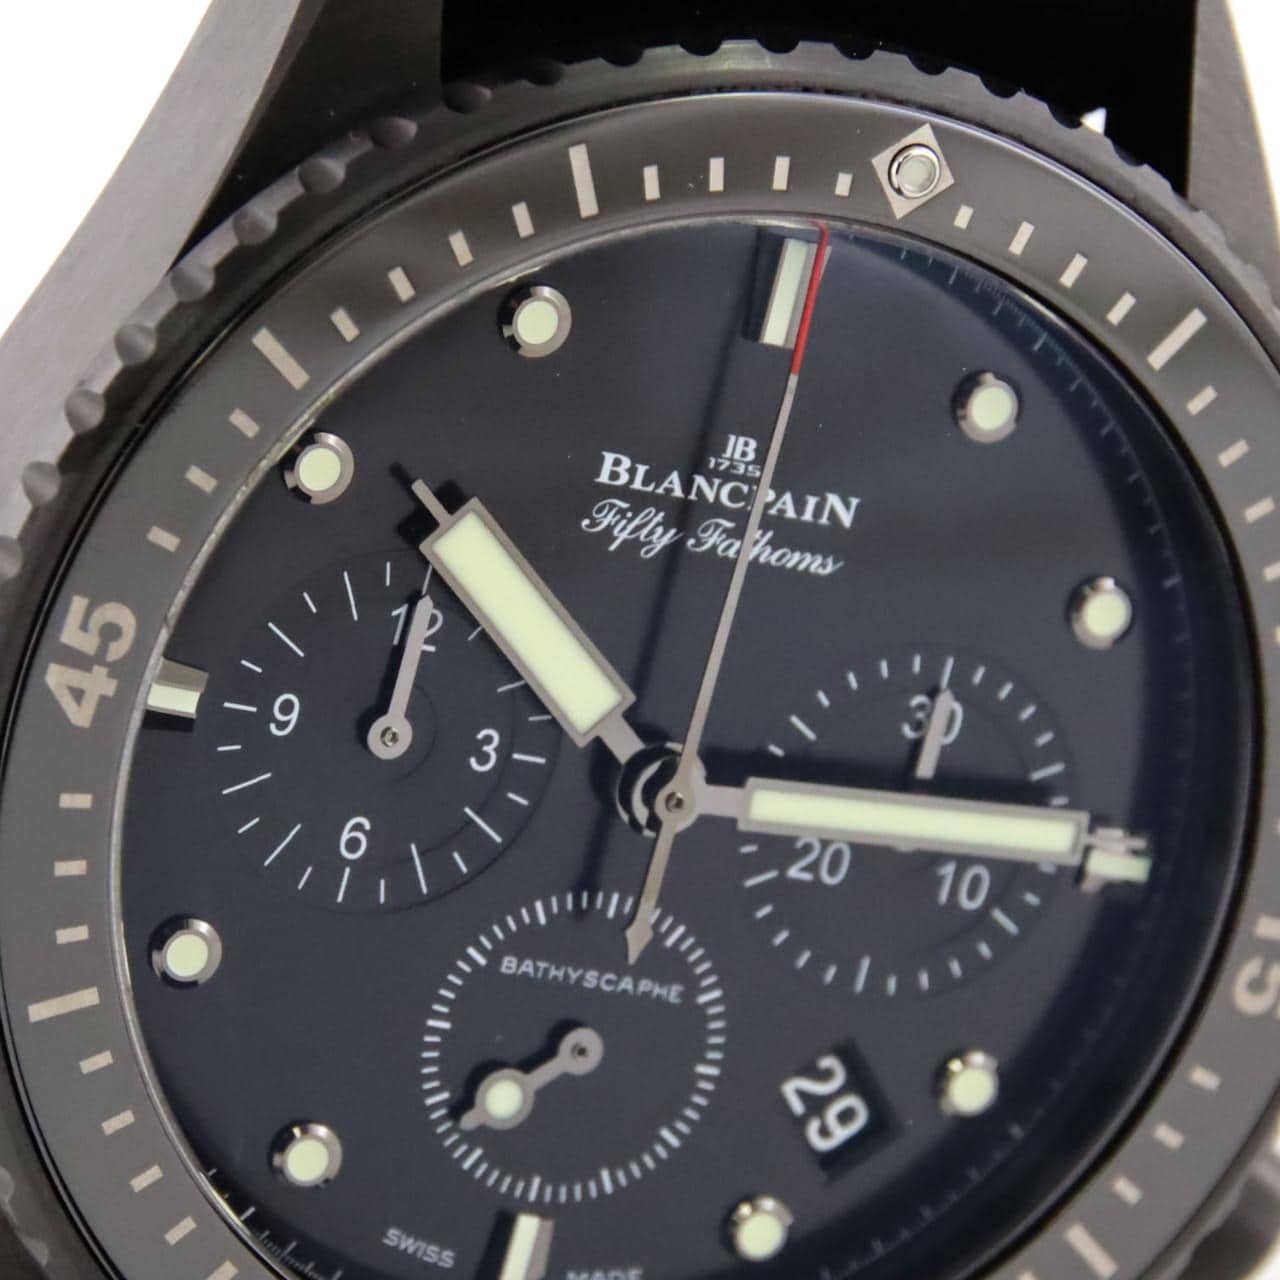 Blancpain五十噚 Bathyscaphe 飛返計時碼錶 5200-0130-NABA 陶瓷自動上弦